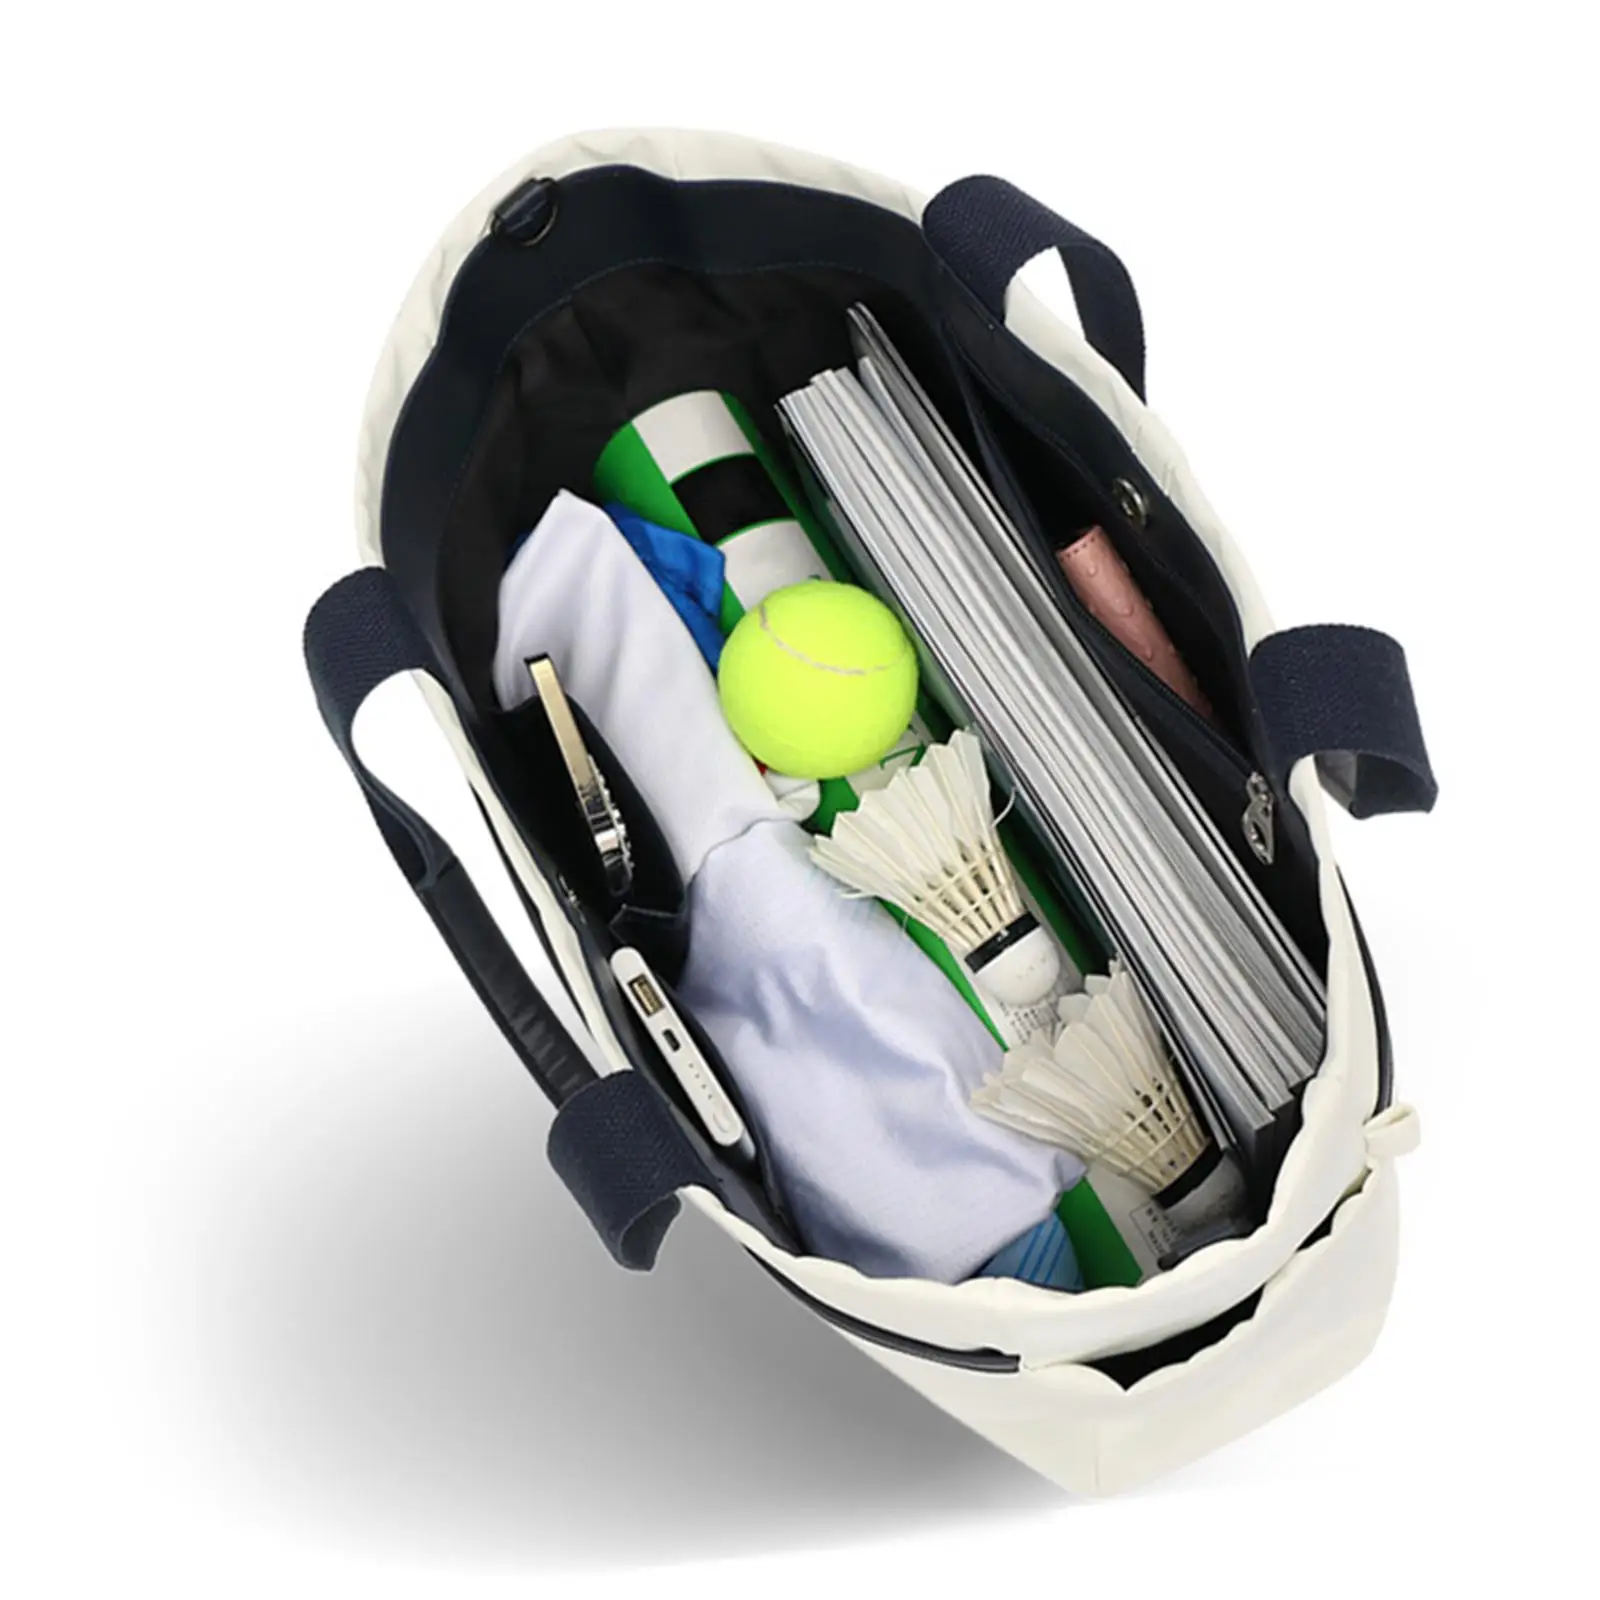 Tennis Tote with Detachable Shoulder Strap Large Storage Outdoor Sports Portable Carrying Multipurpose Tennis Handbag Racket Bag